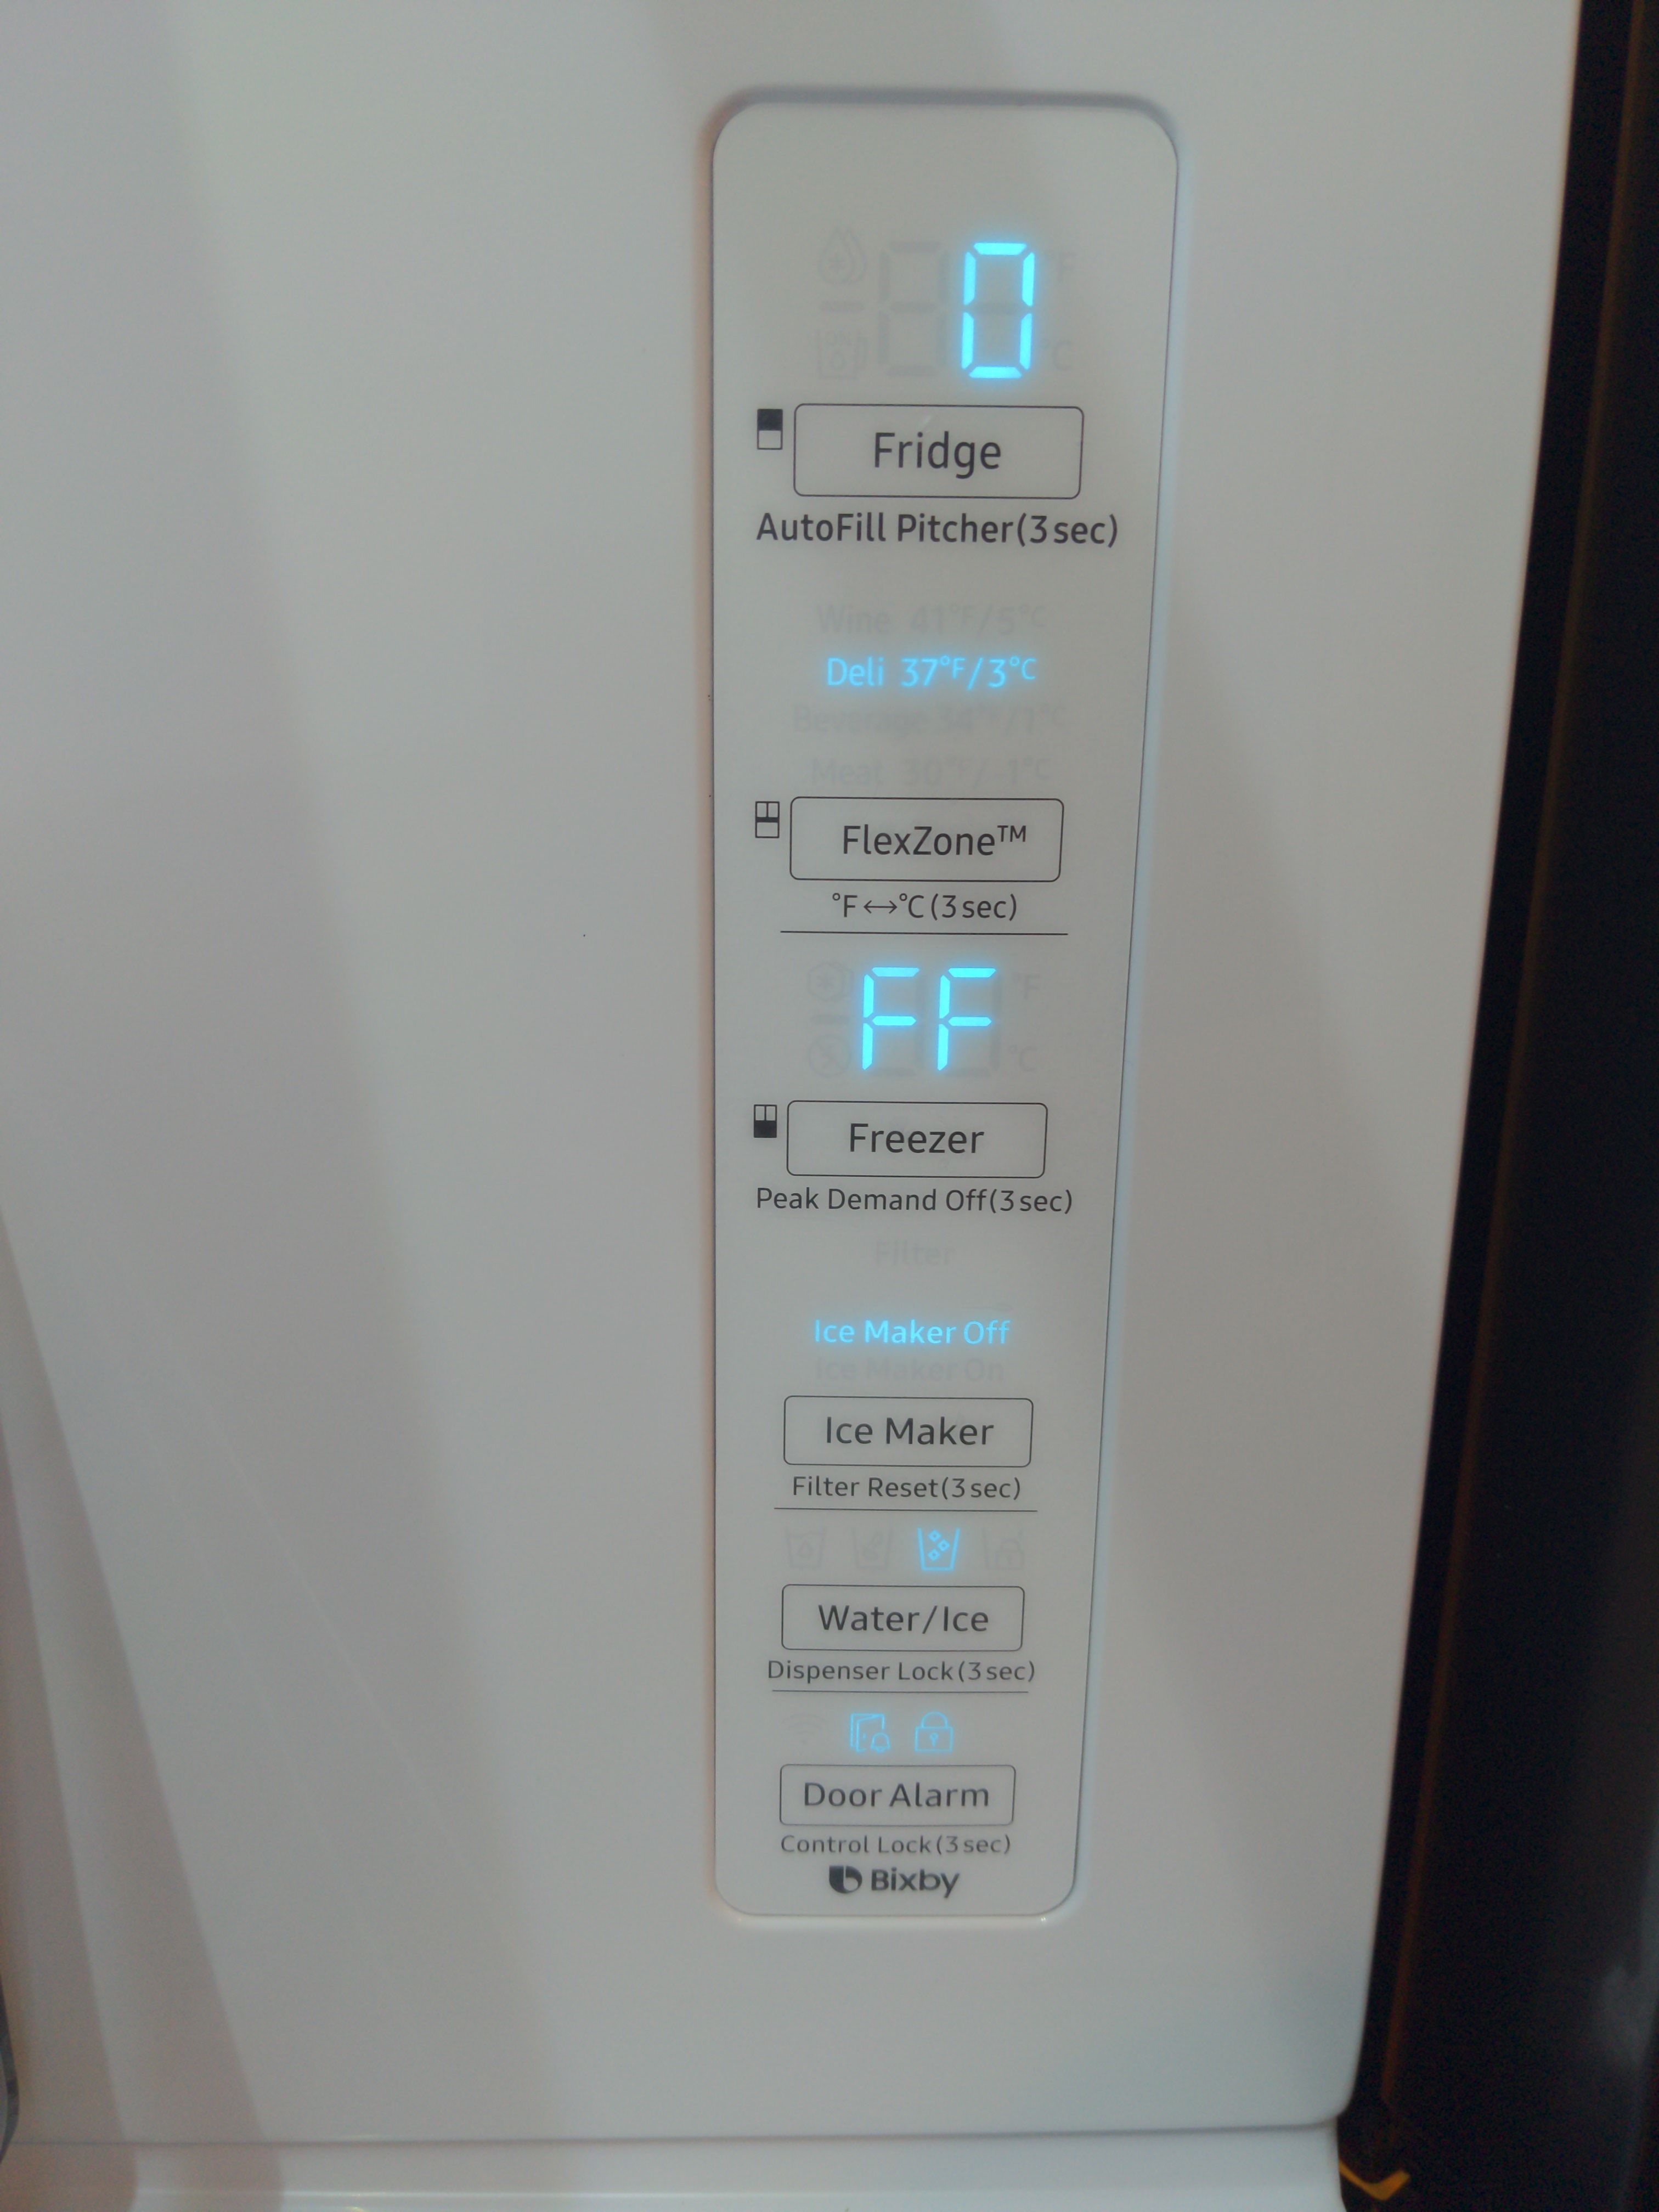 Solved: Can't get fridge off "0" "FF" mode - Samsung Community